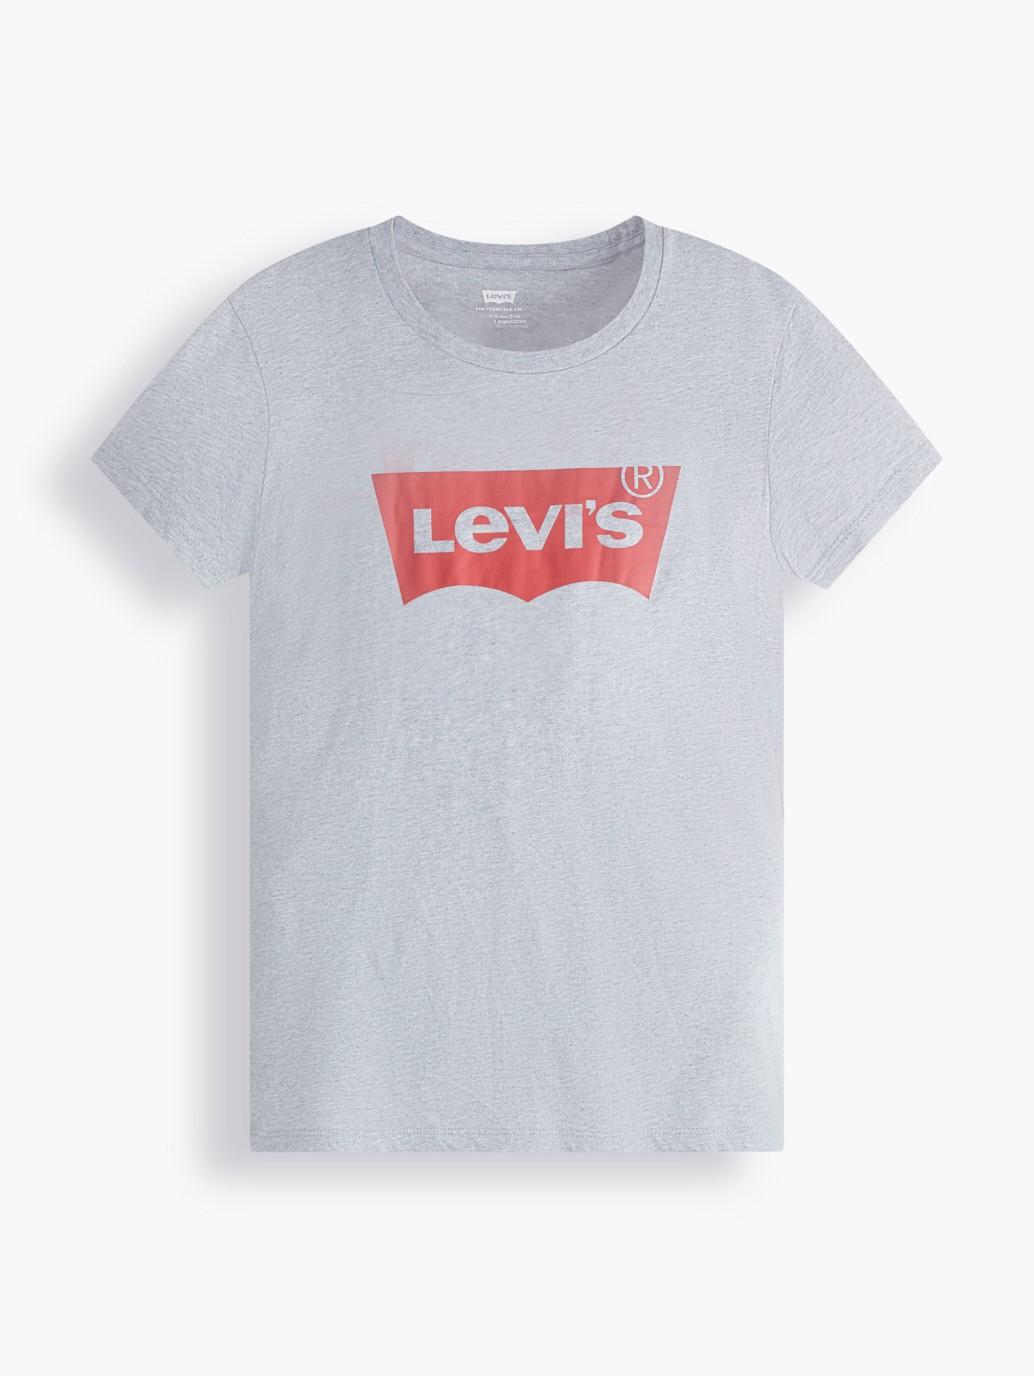 Buy Levi's® Women's Slim Logo T-Shirt| Levi’s® Official Online Store PH